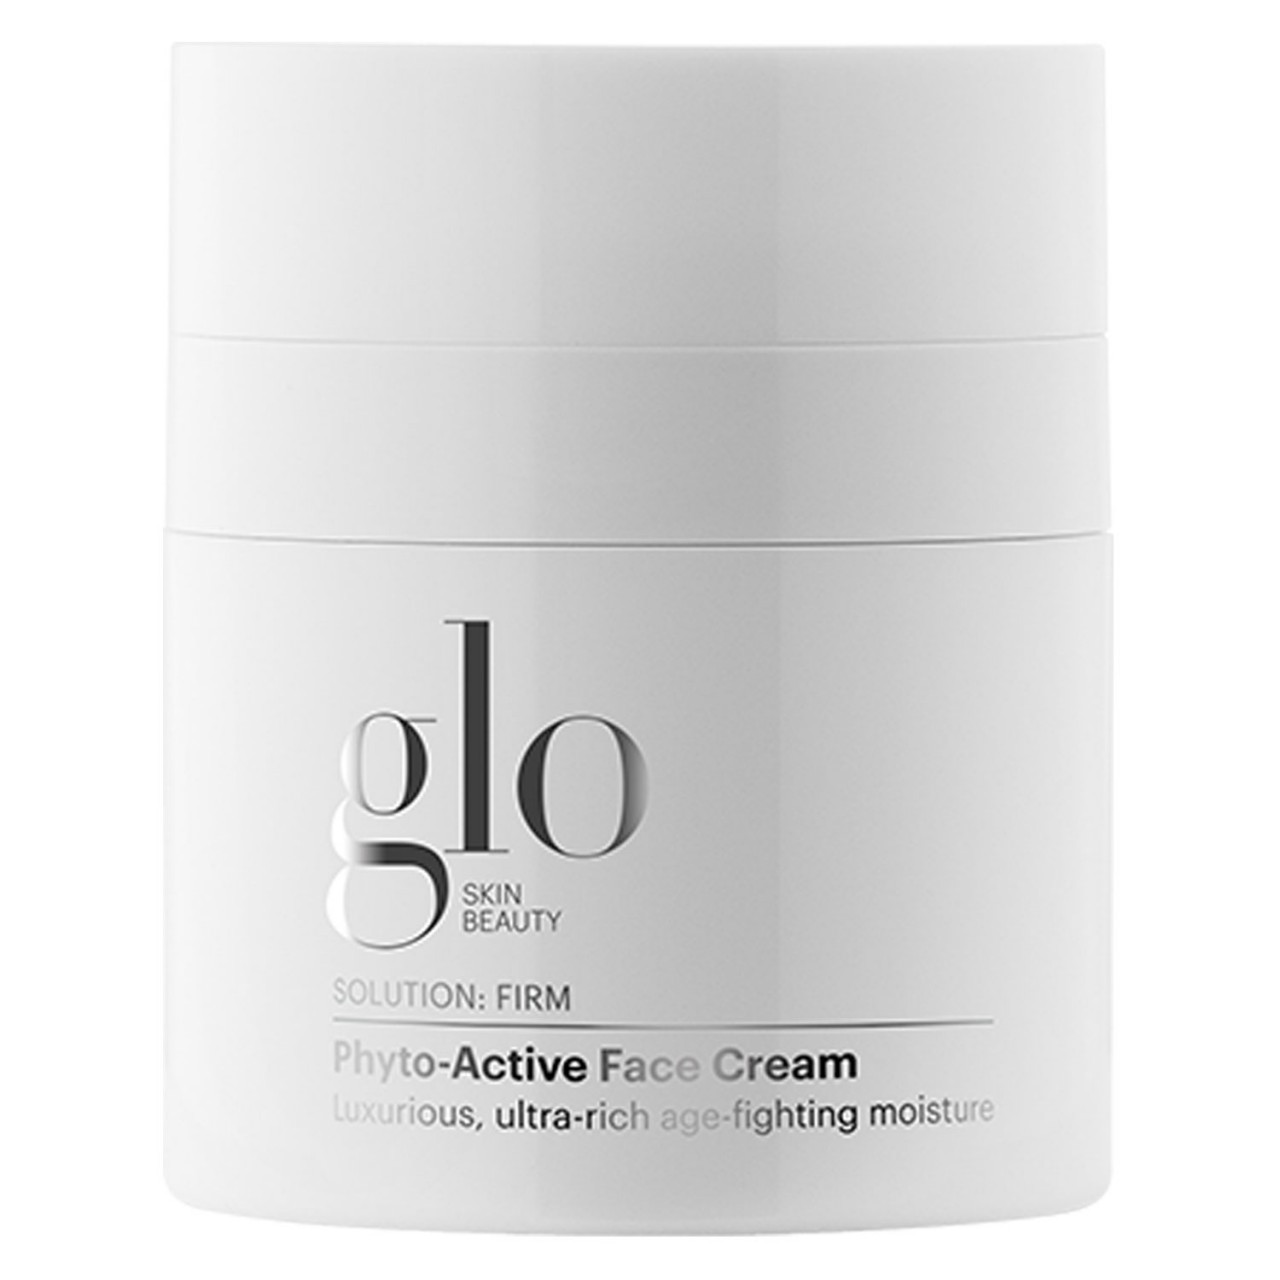 Glo Skin Beauty Care - Phyto-Active Face Cream von Glo Skin Beauty